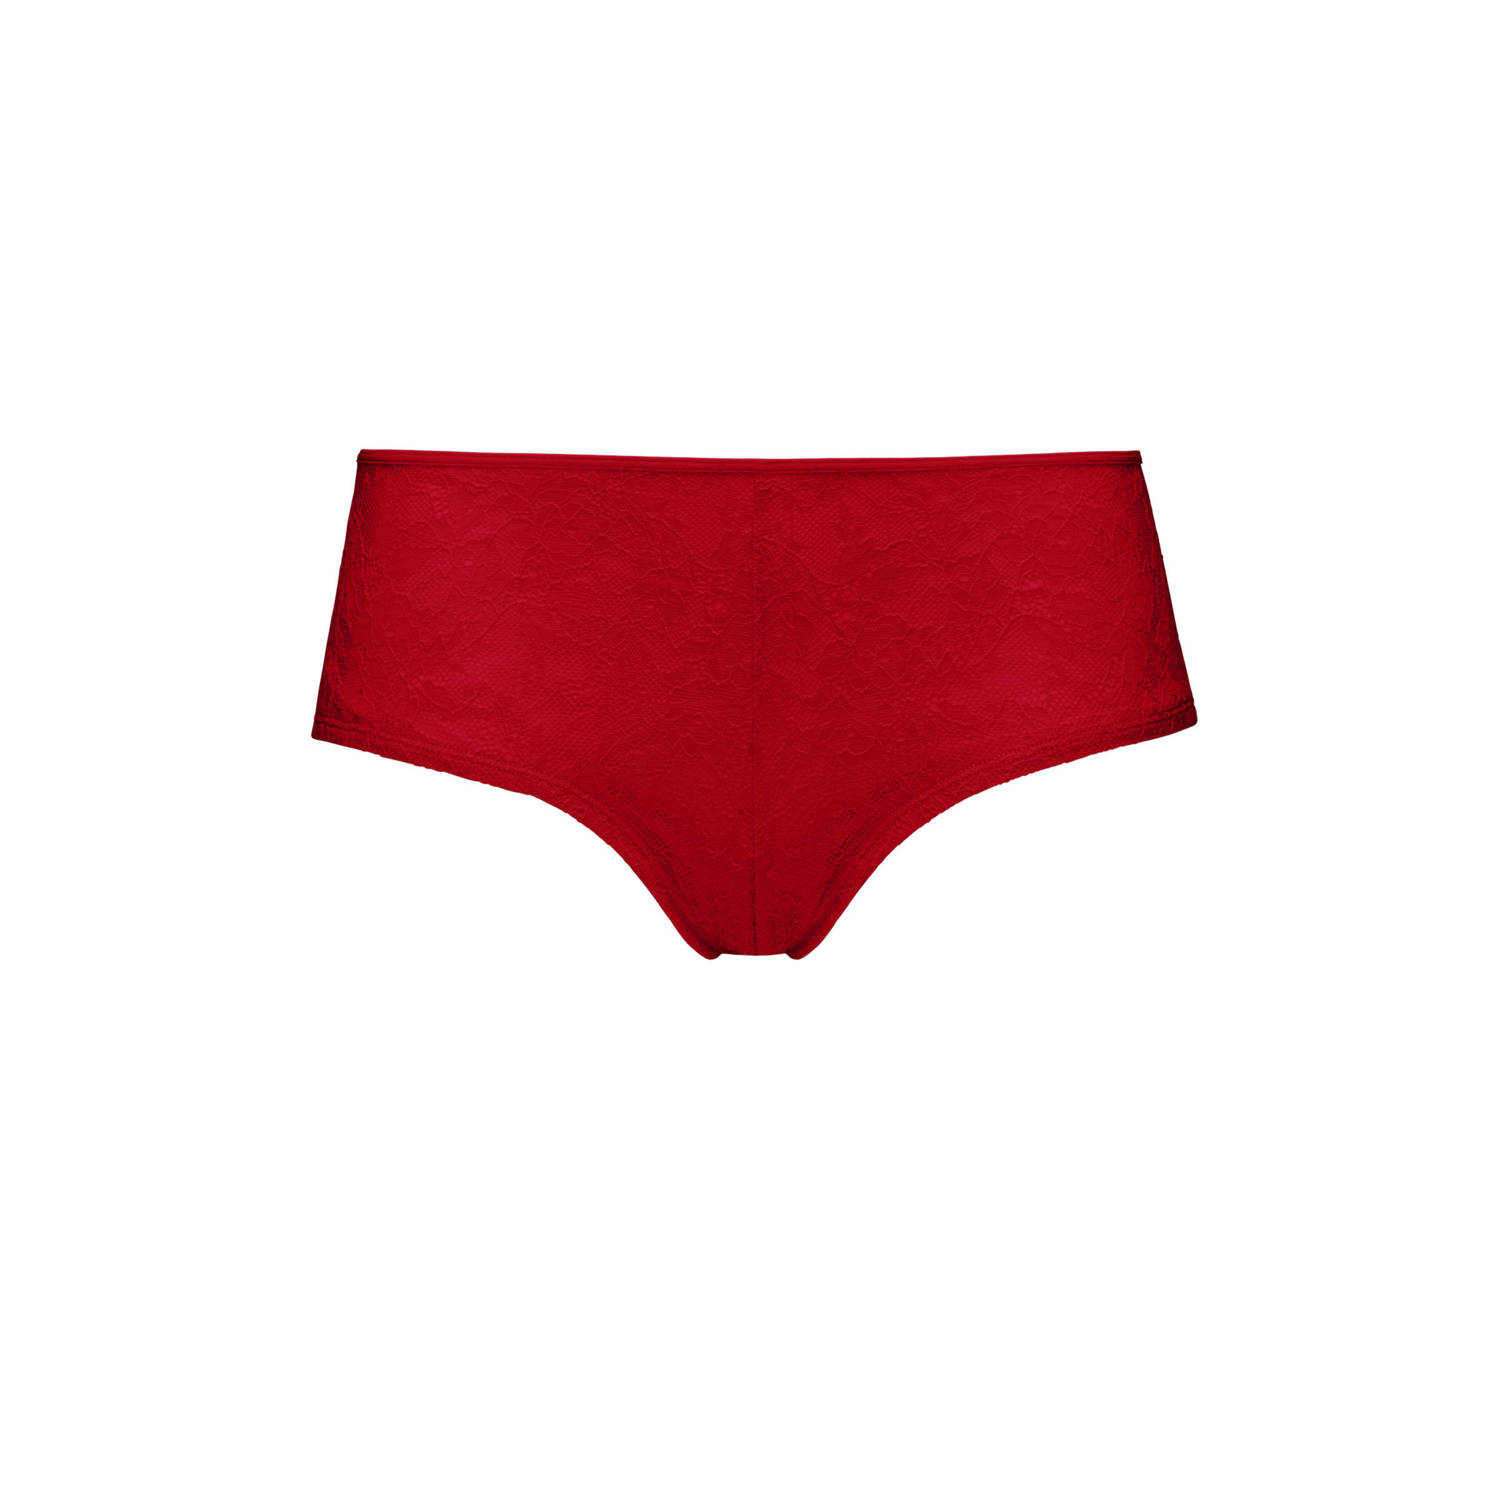 Marlies Dekkers space odyssey 12 cm brazilian shorts red lace